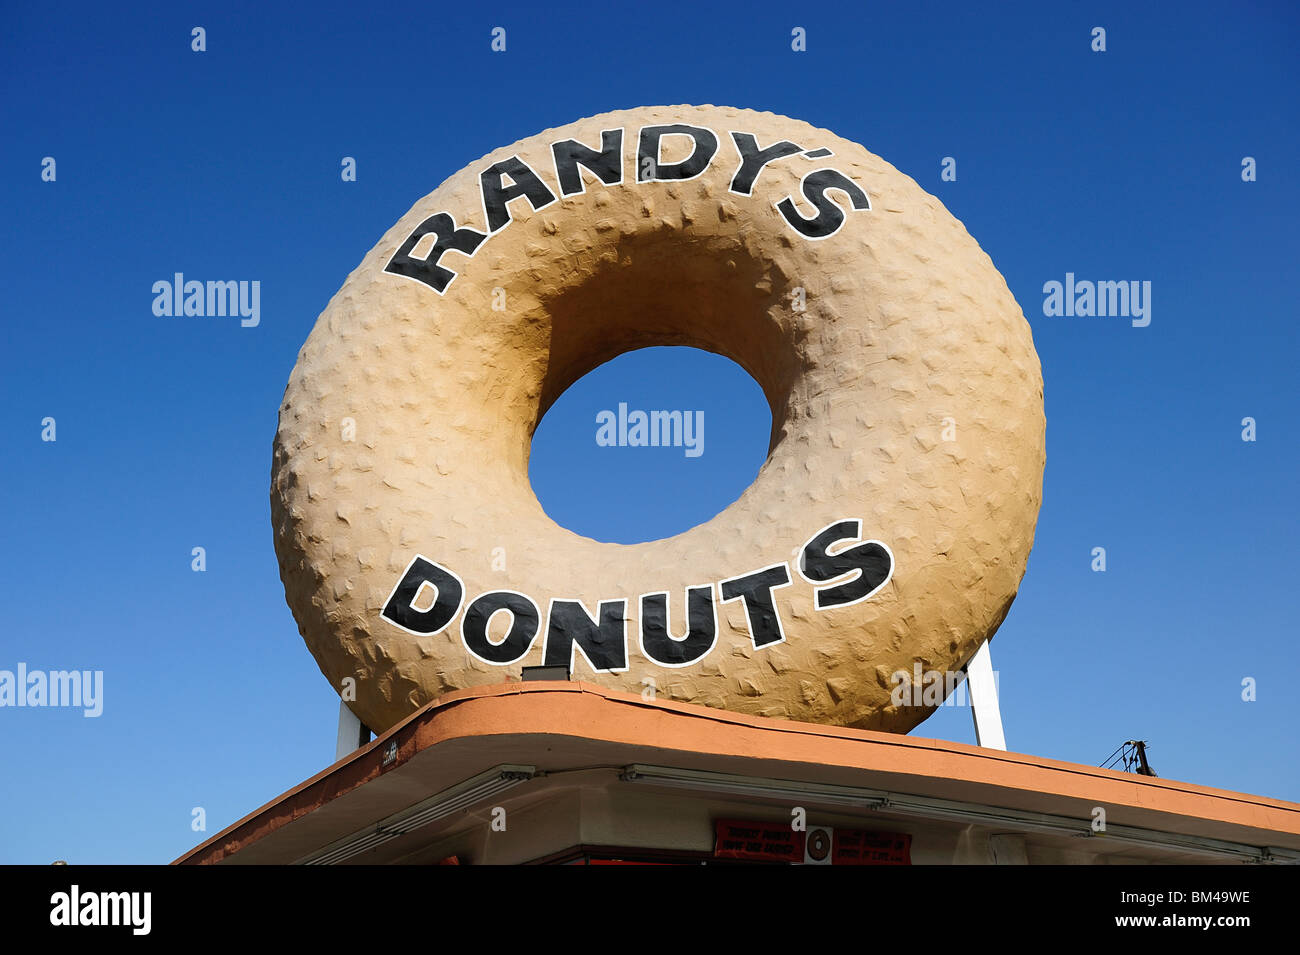 Randys Donut Stand, Inglewood, Los Angeles, California, USA Famous Los Angeles landmark Stock Photo